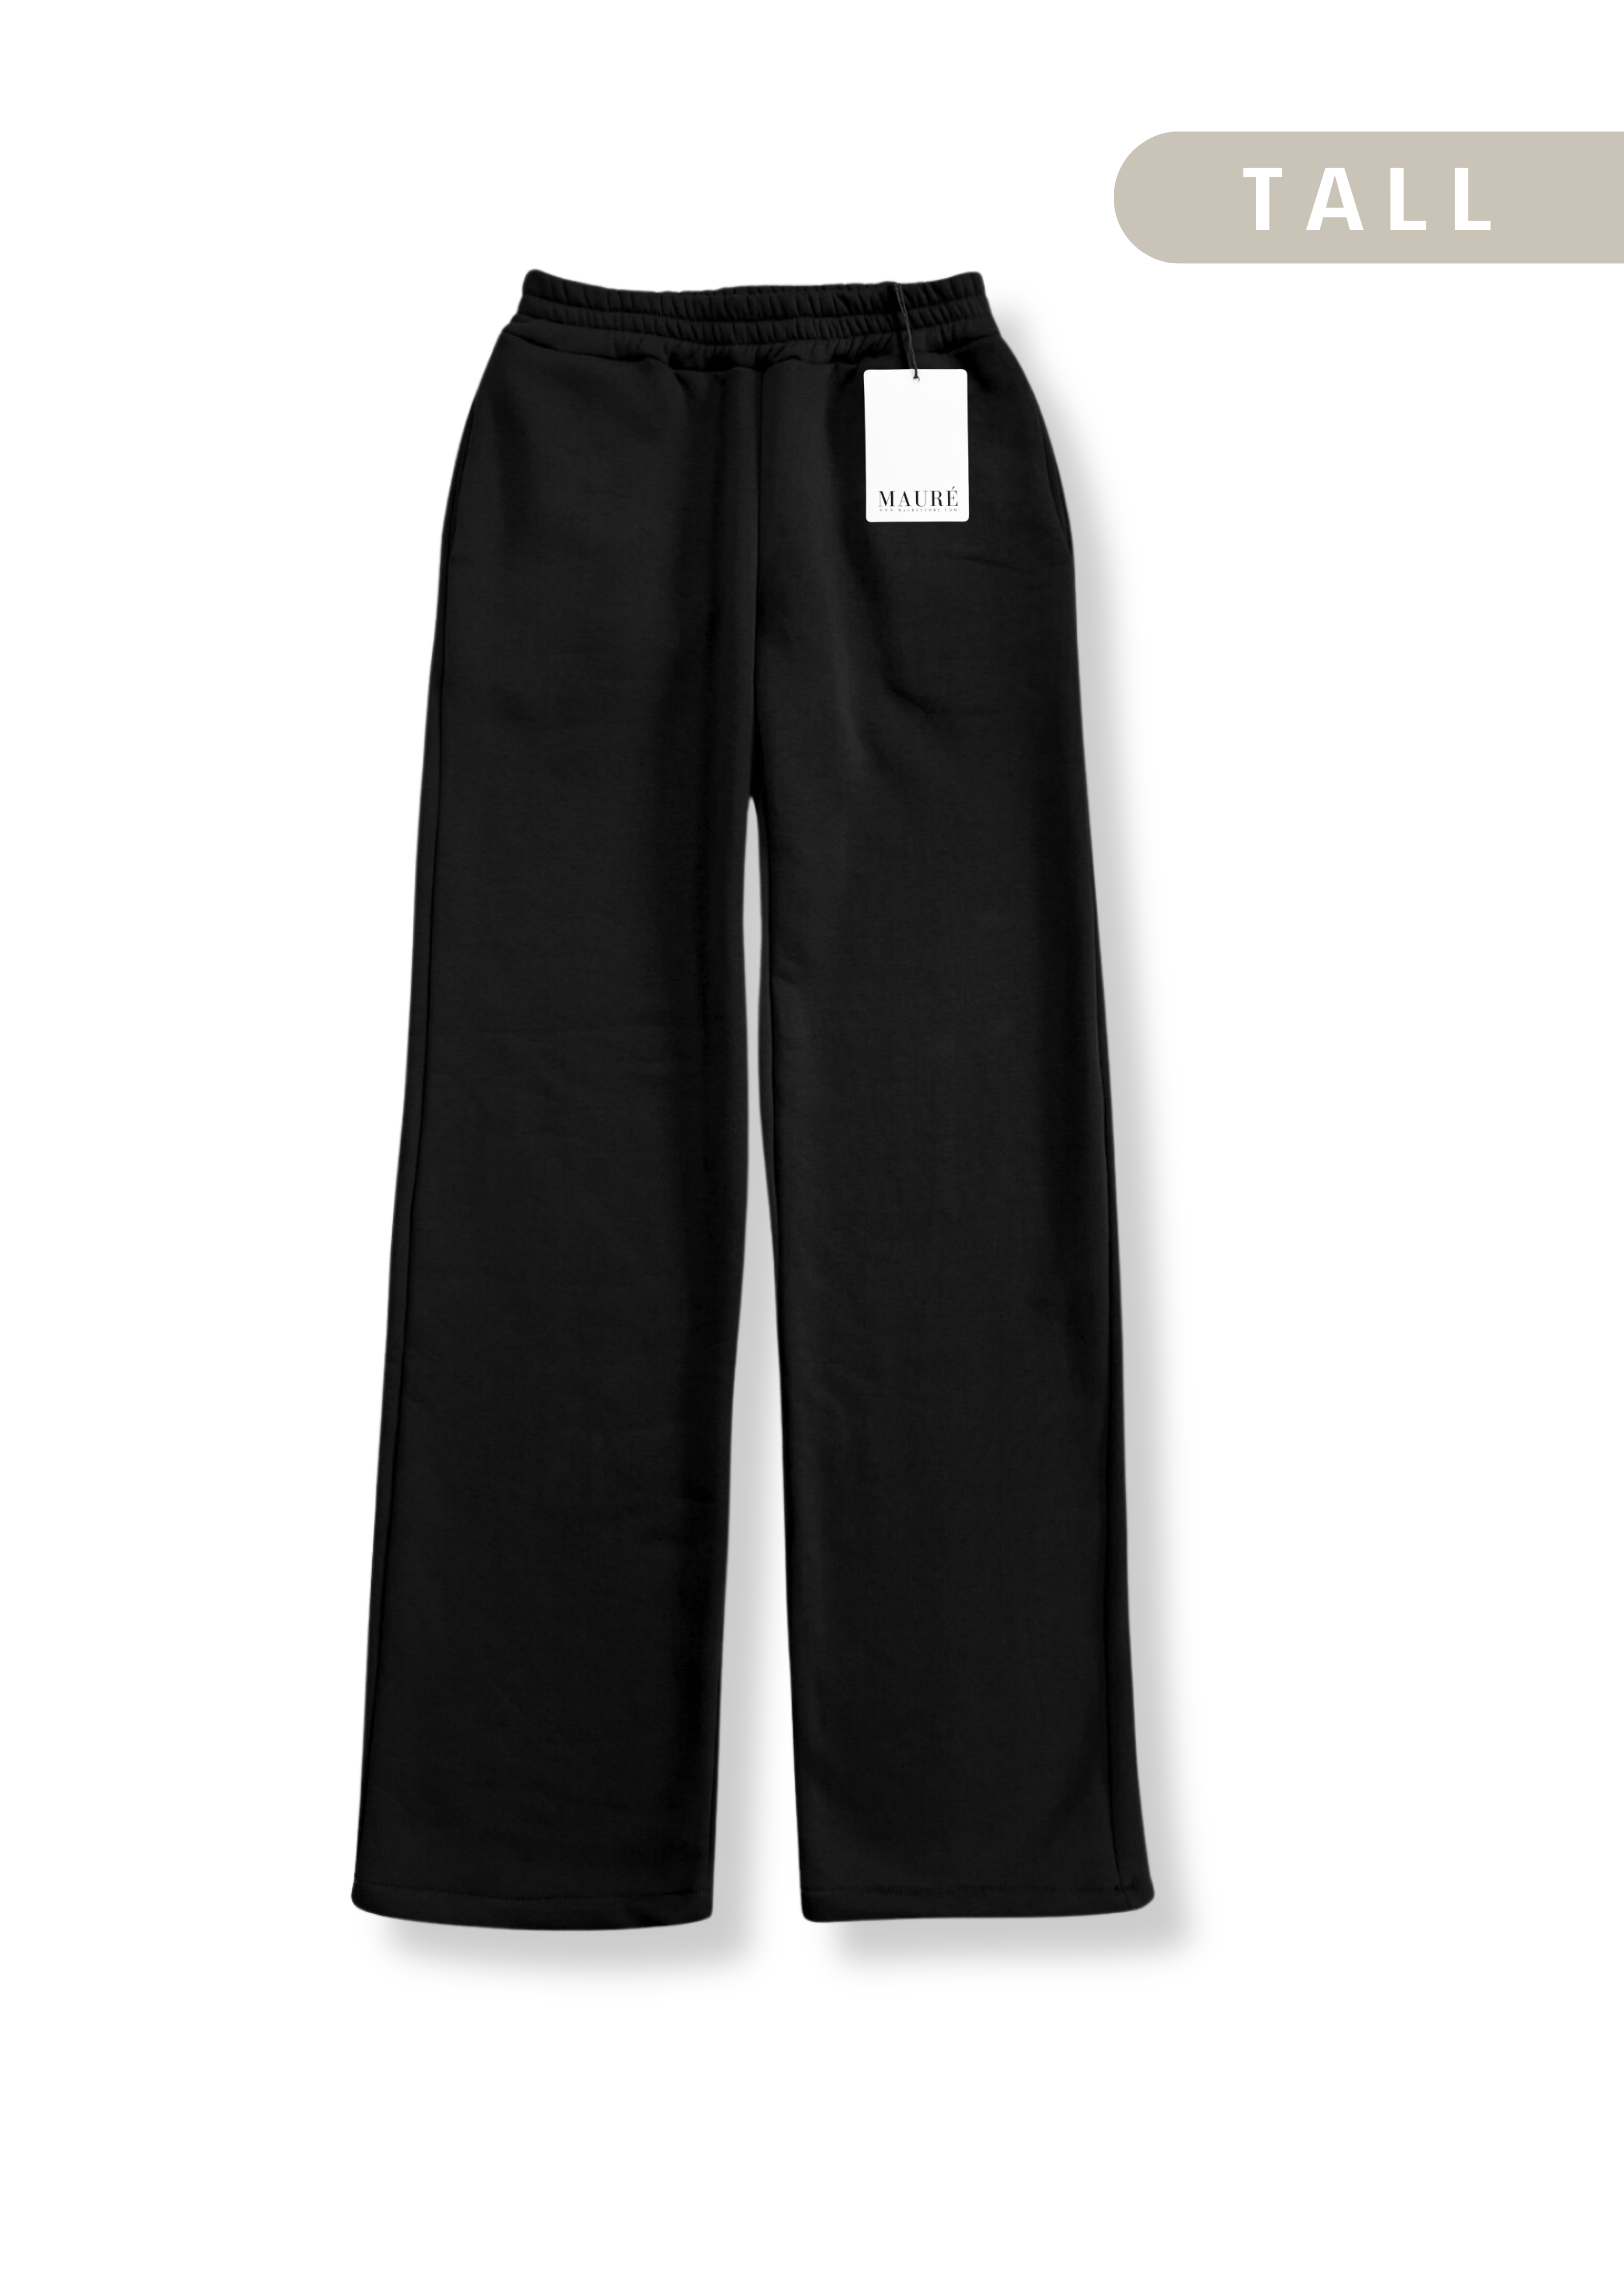 Low/mid waist jogger pants black (TALL)